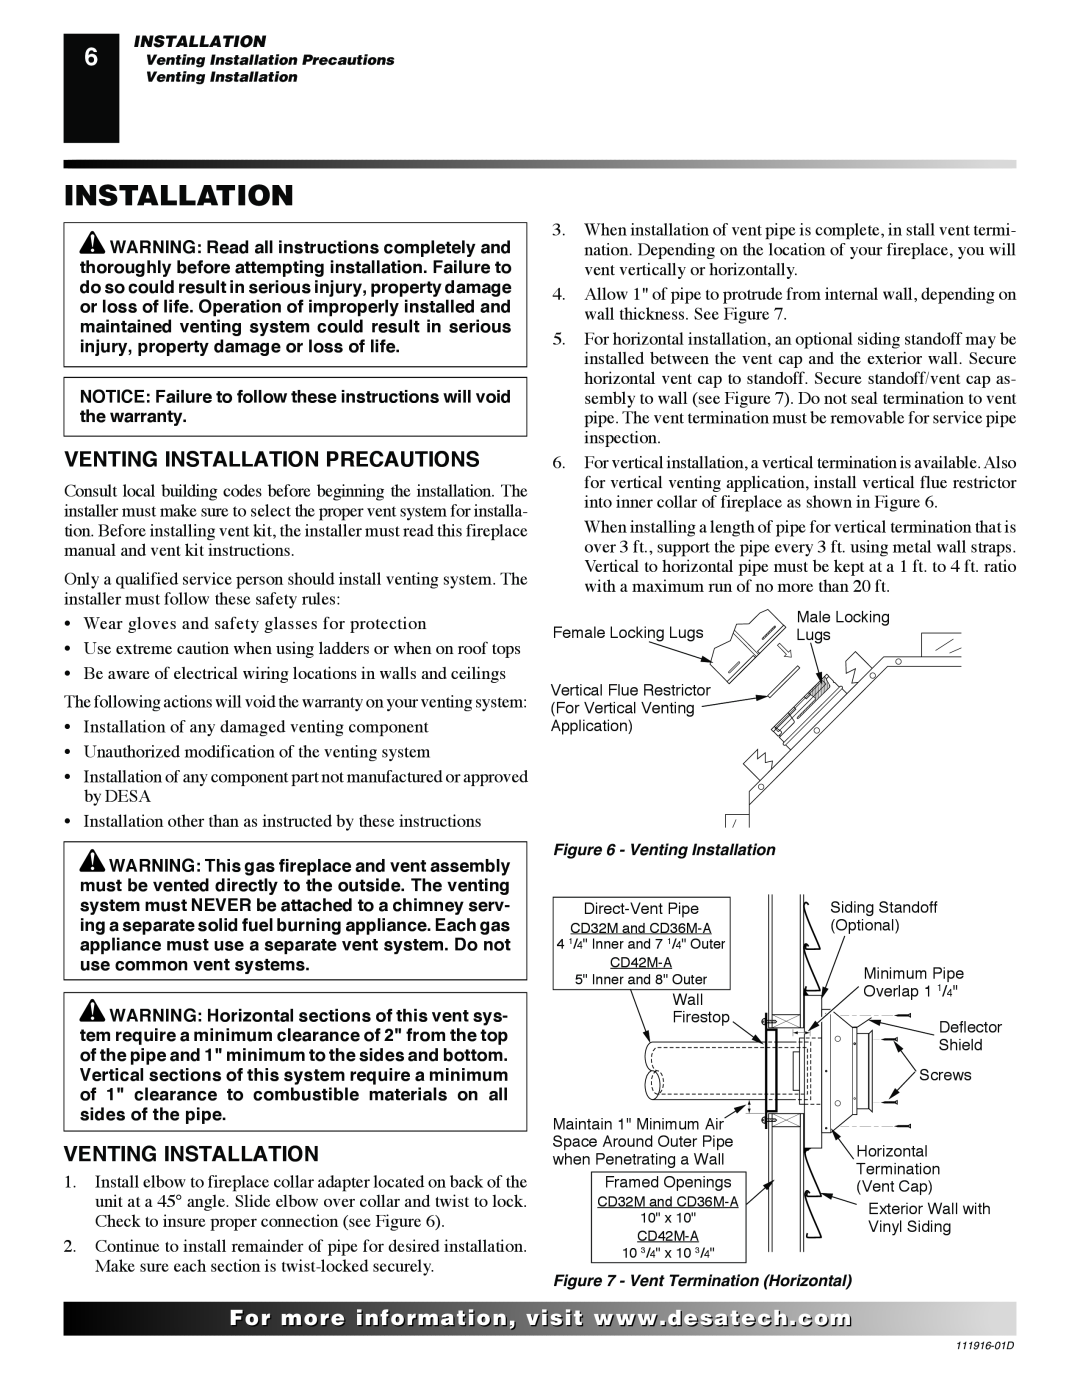 Desa CD42M (-A)(-A2), CD36M, CD32M, CD42M installation manual Venting Installation Precautions, For..com 